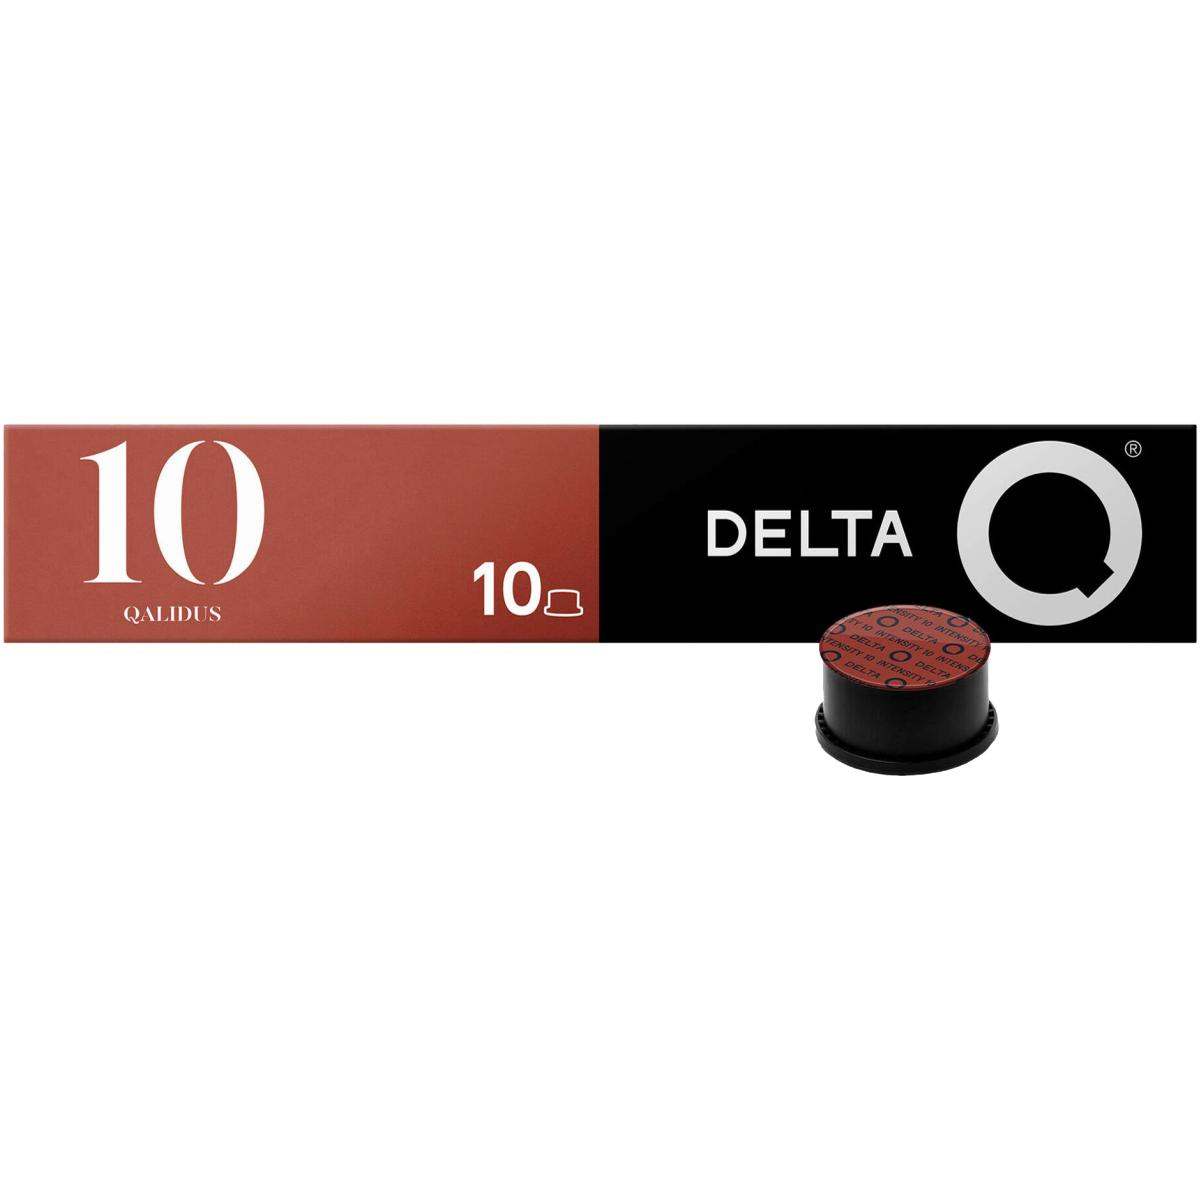 Pack Delta Q Intensity